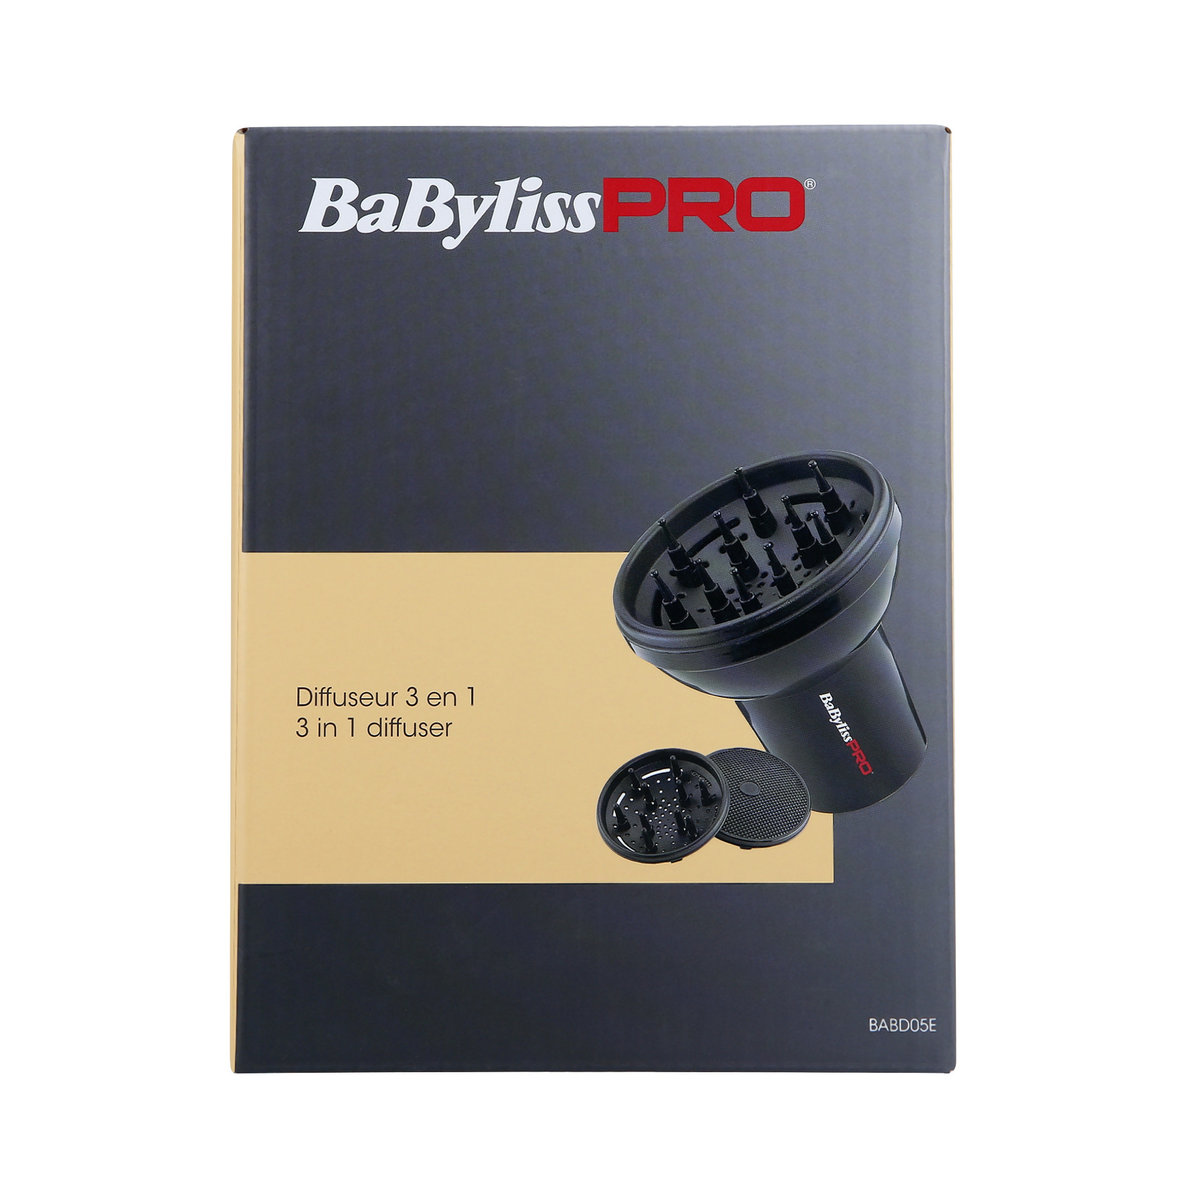 Babyliss Pro Diffuser Pro 4 dyfuzor do suszarki BABD05E 3 szt.